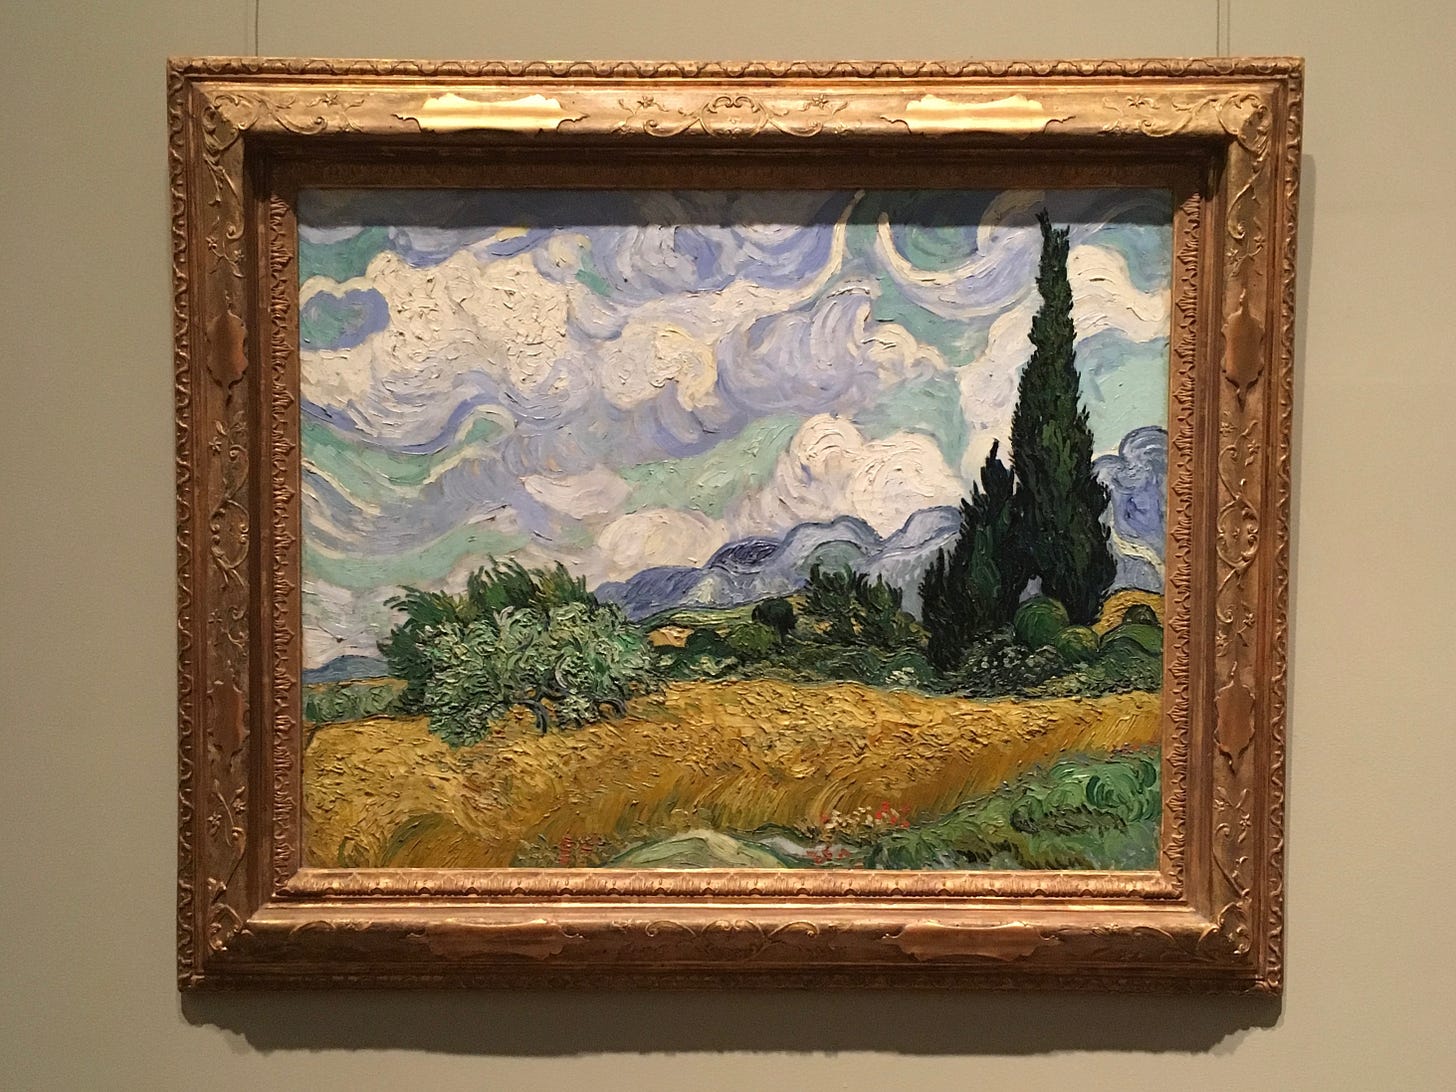 Vincent van Gogh's Wheatfield with Cypresses that hangs in The Metropolitan Museum of Art.